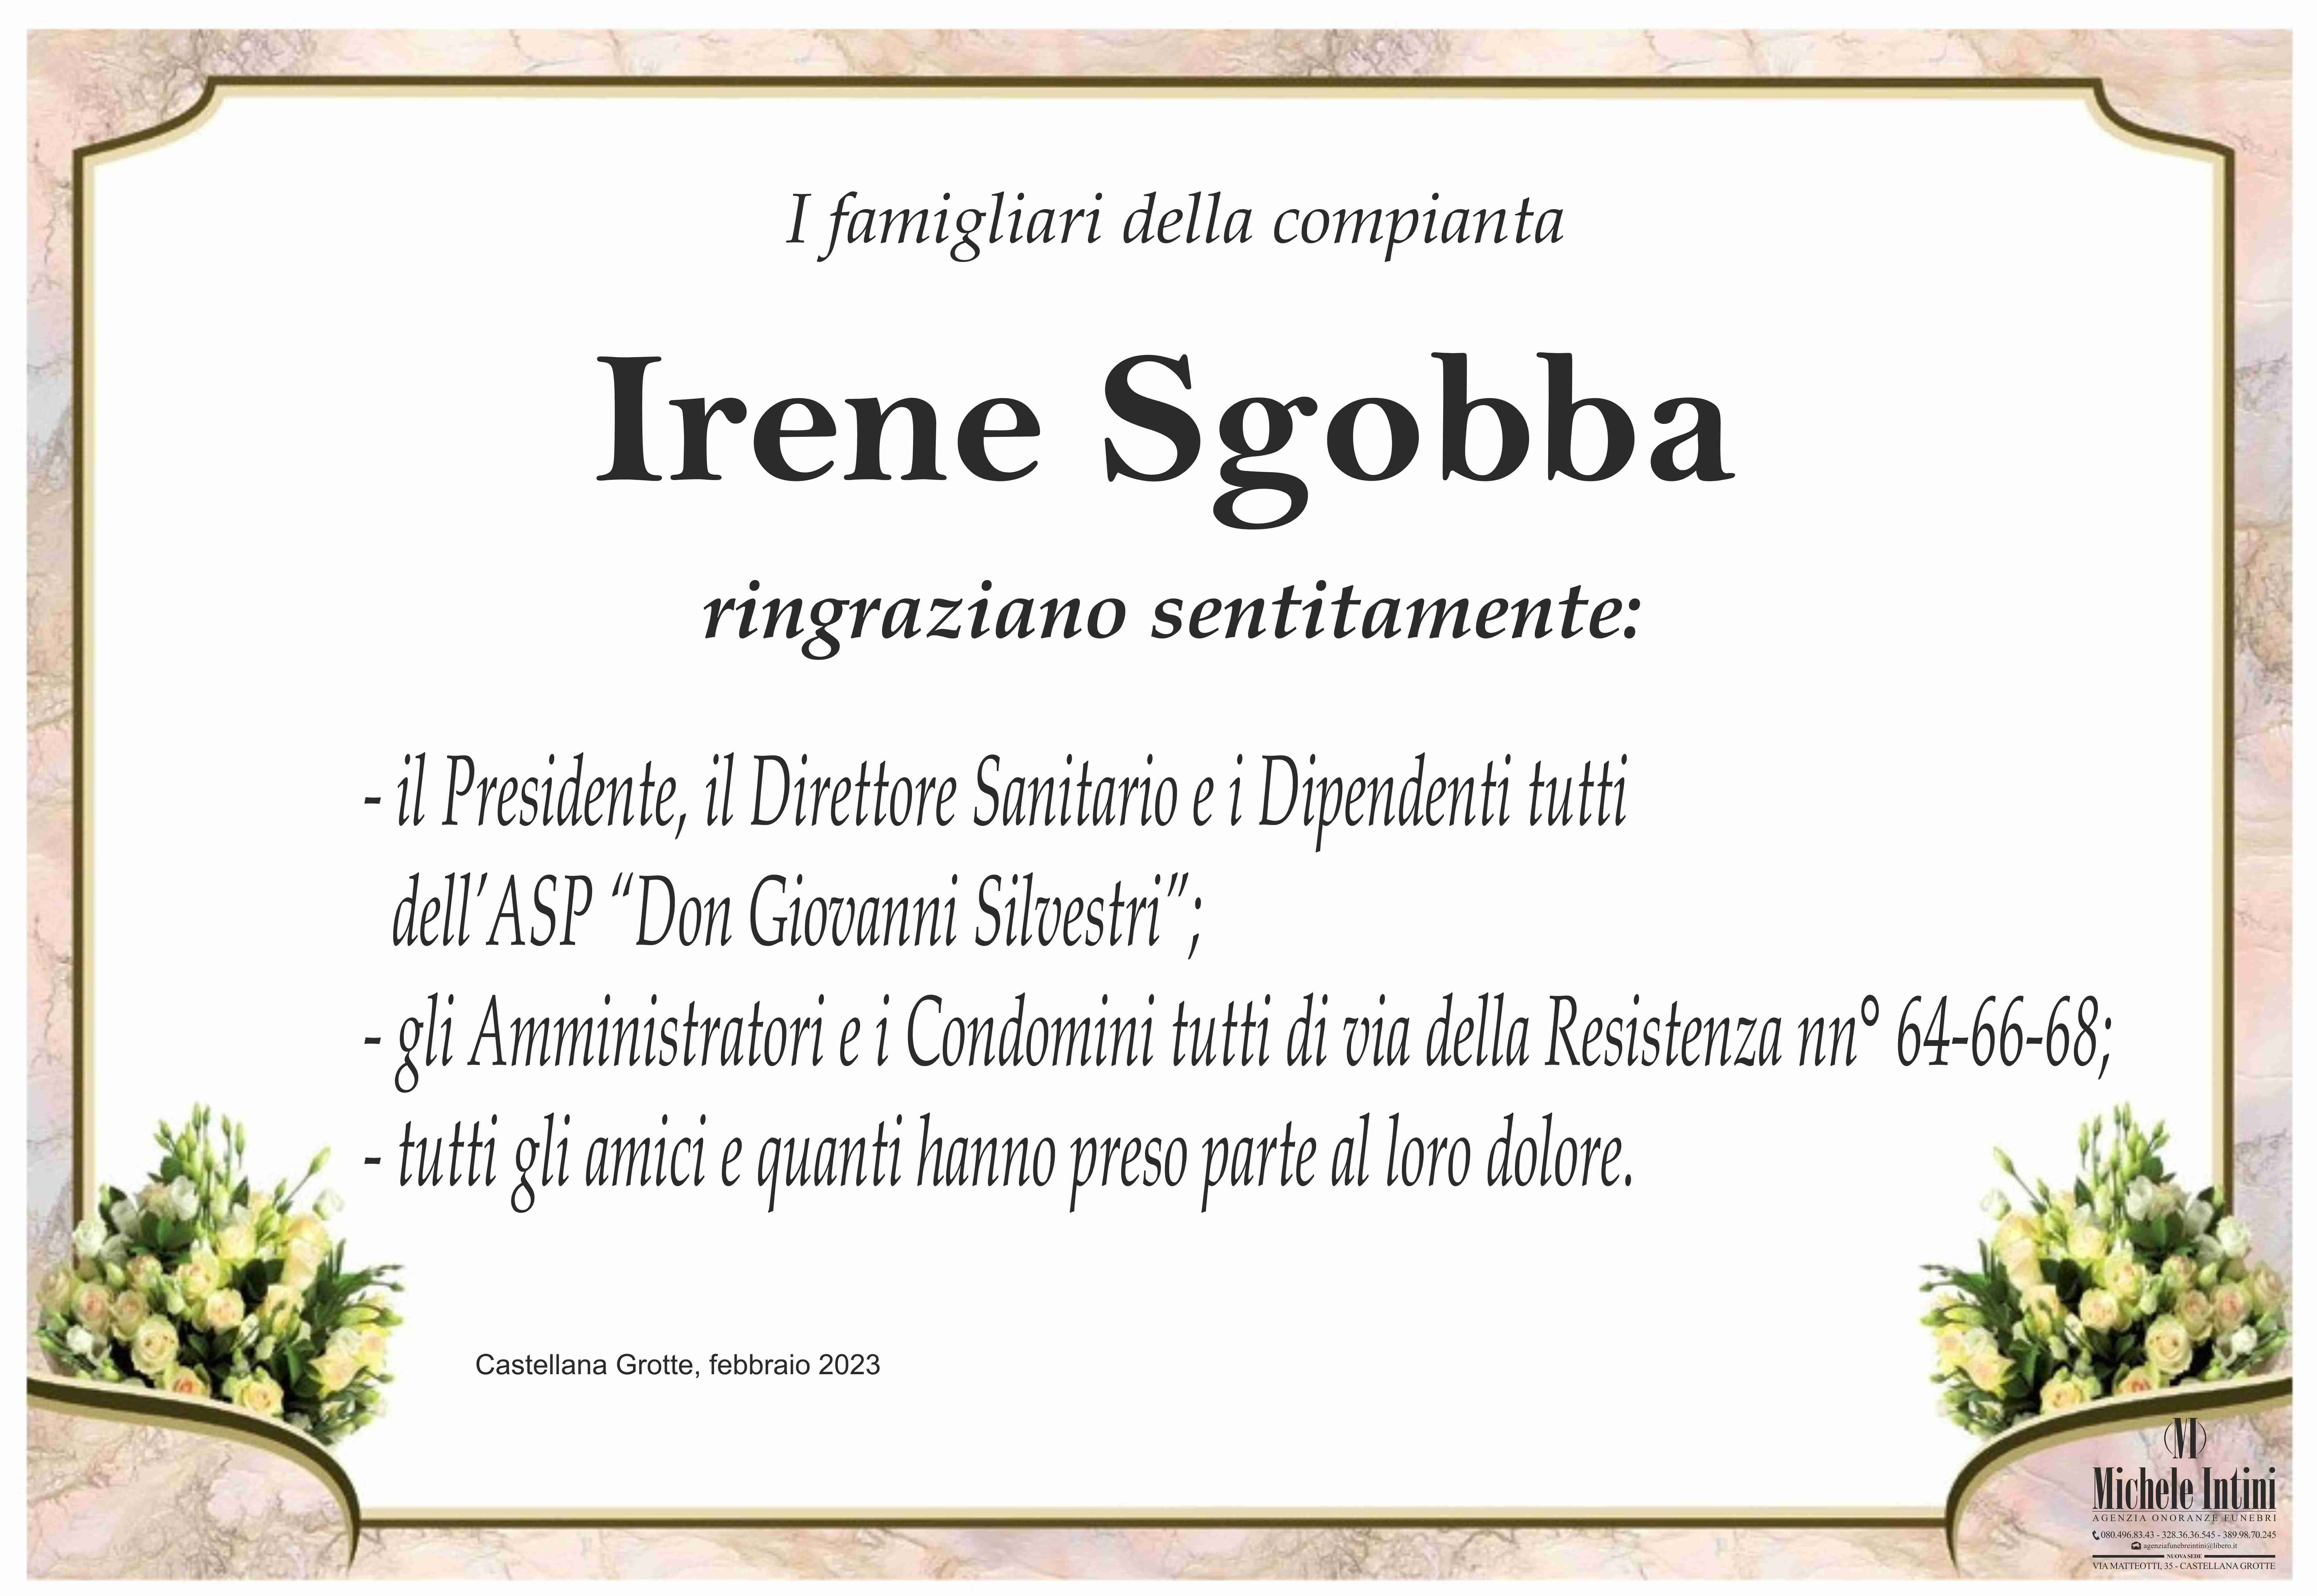 Irene Sgobba